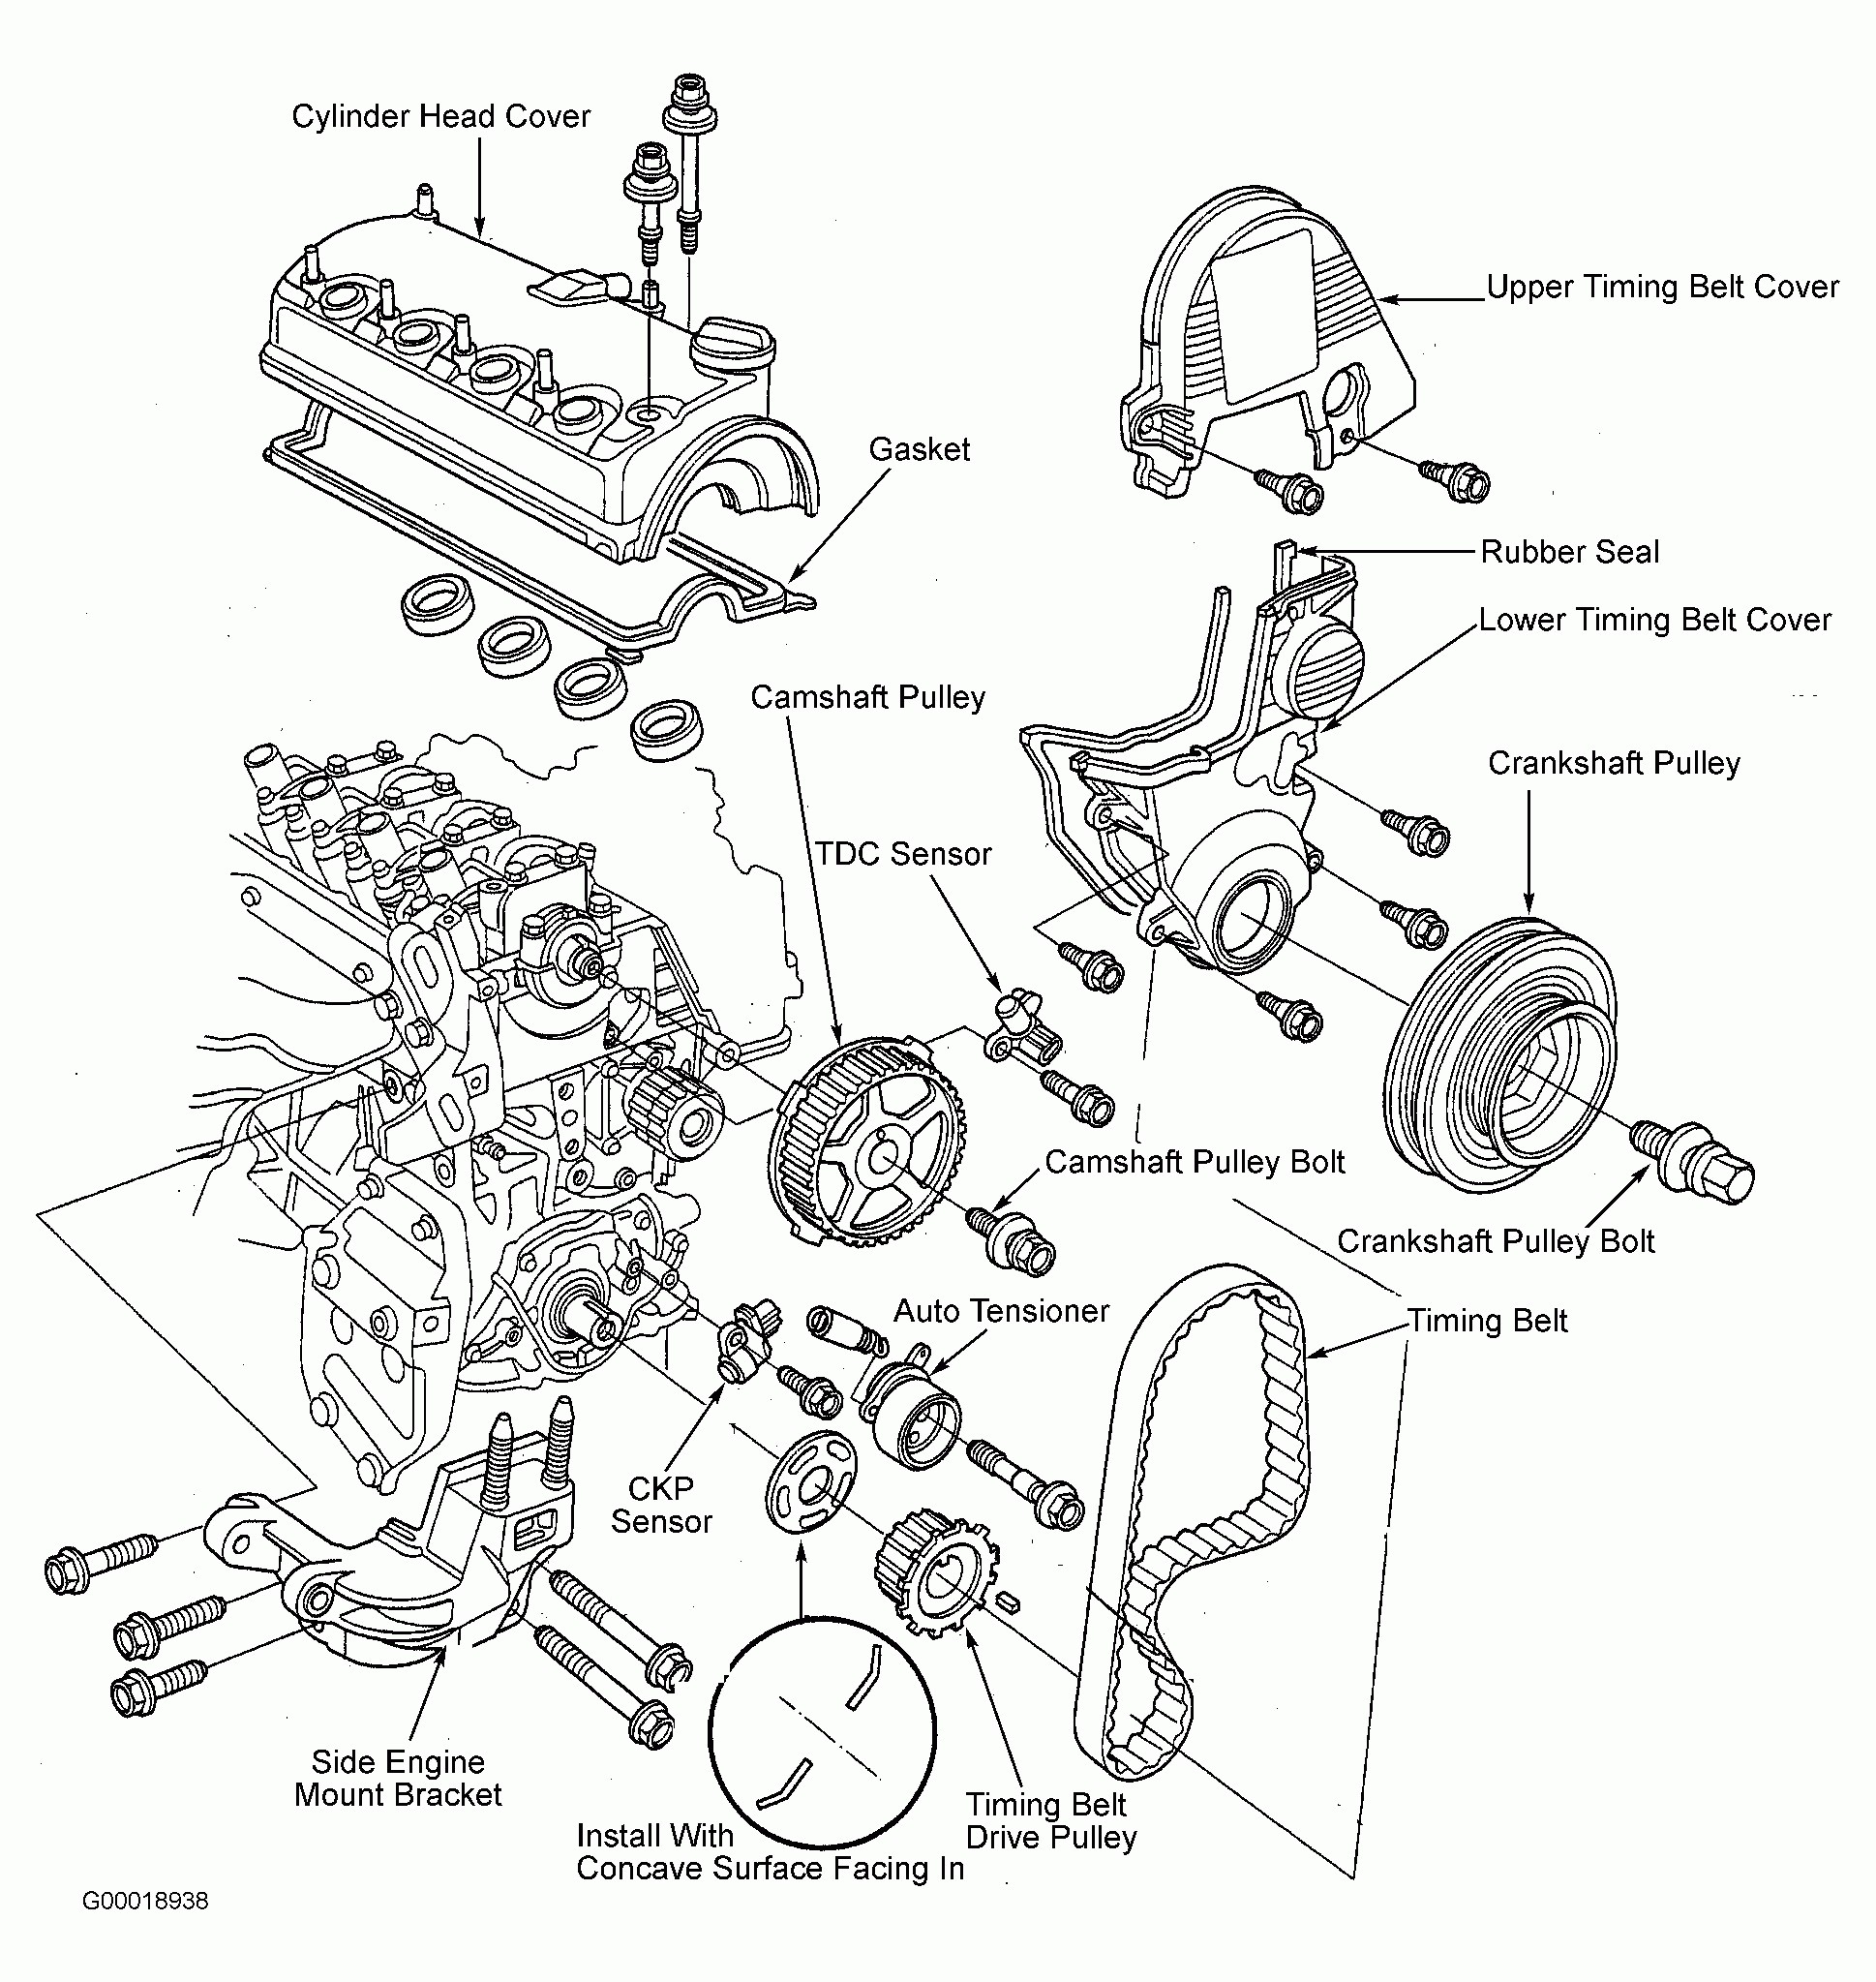 Honda Civic Parts Diagram Cool Review About 2003 Honda Civic Dx with Extraordinary Gallery Of Honda Civic Parts Diagram